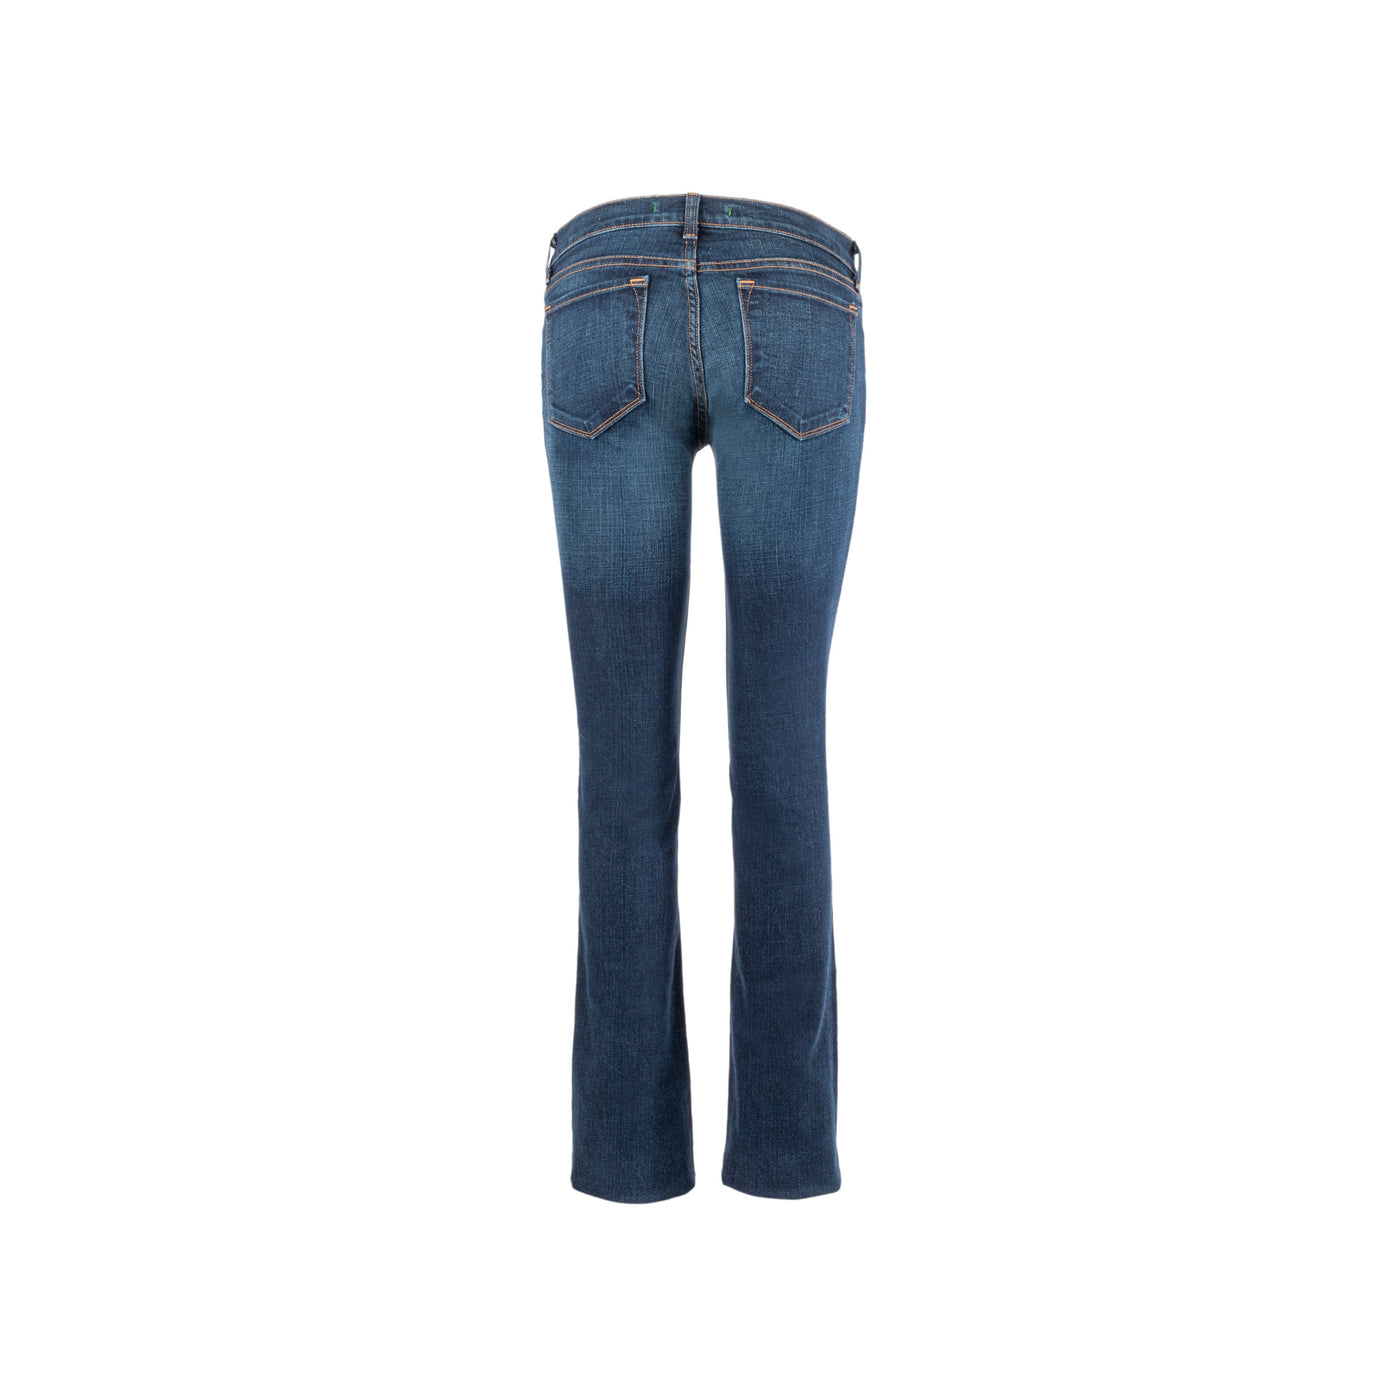 J Brand cut #331, slim fit jeans pre-owned